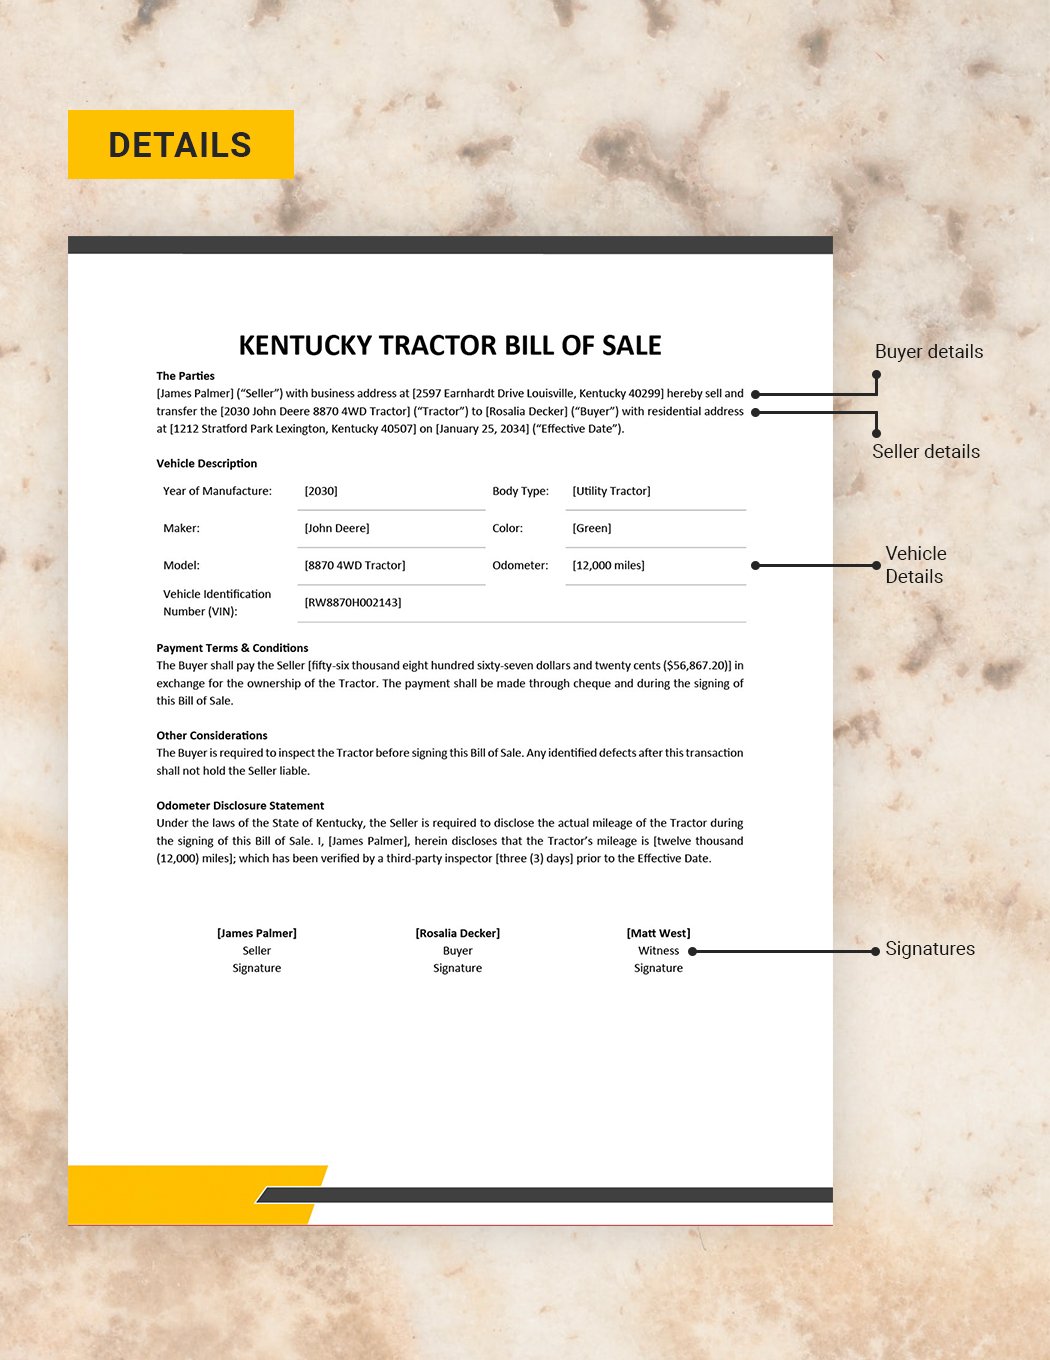 Kentucky Tractor Bill of Sale Template